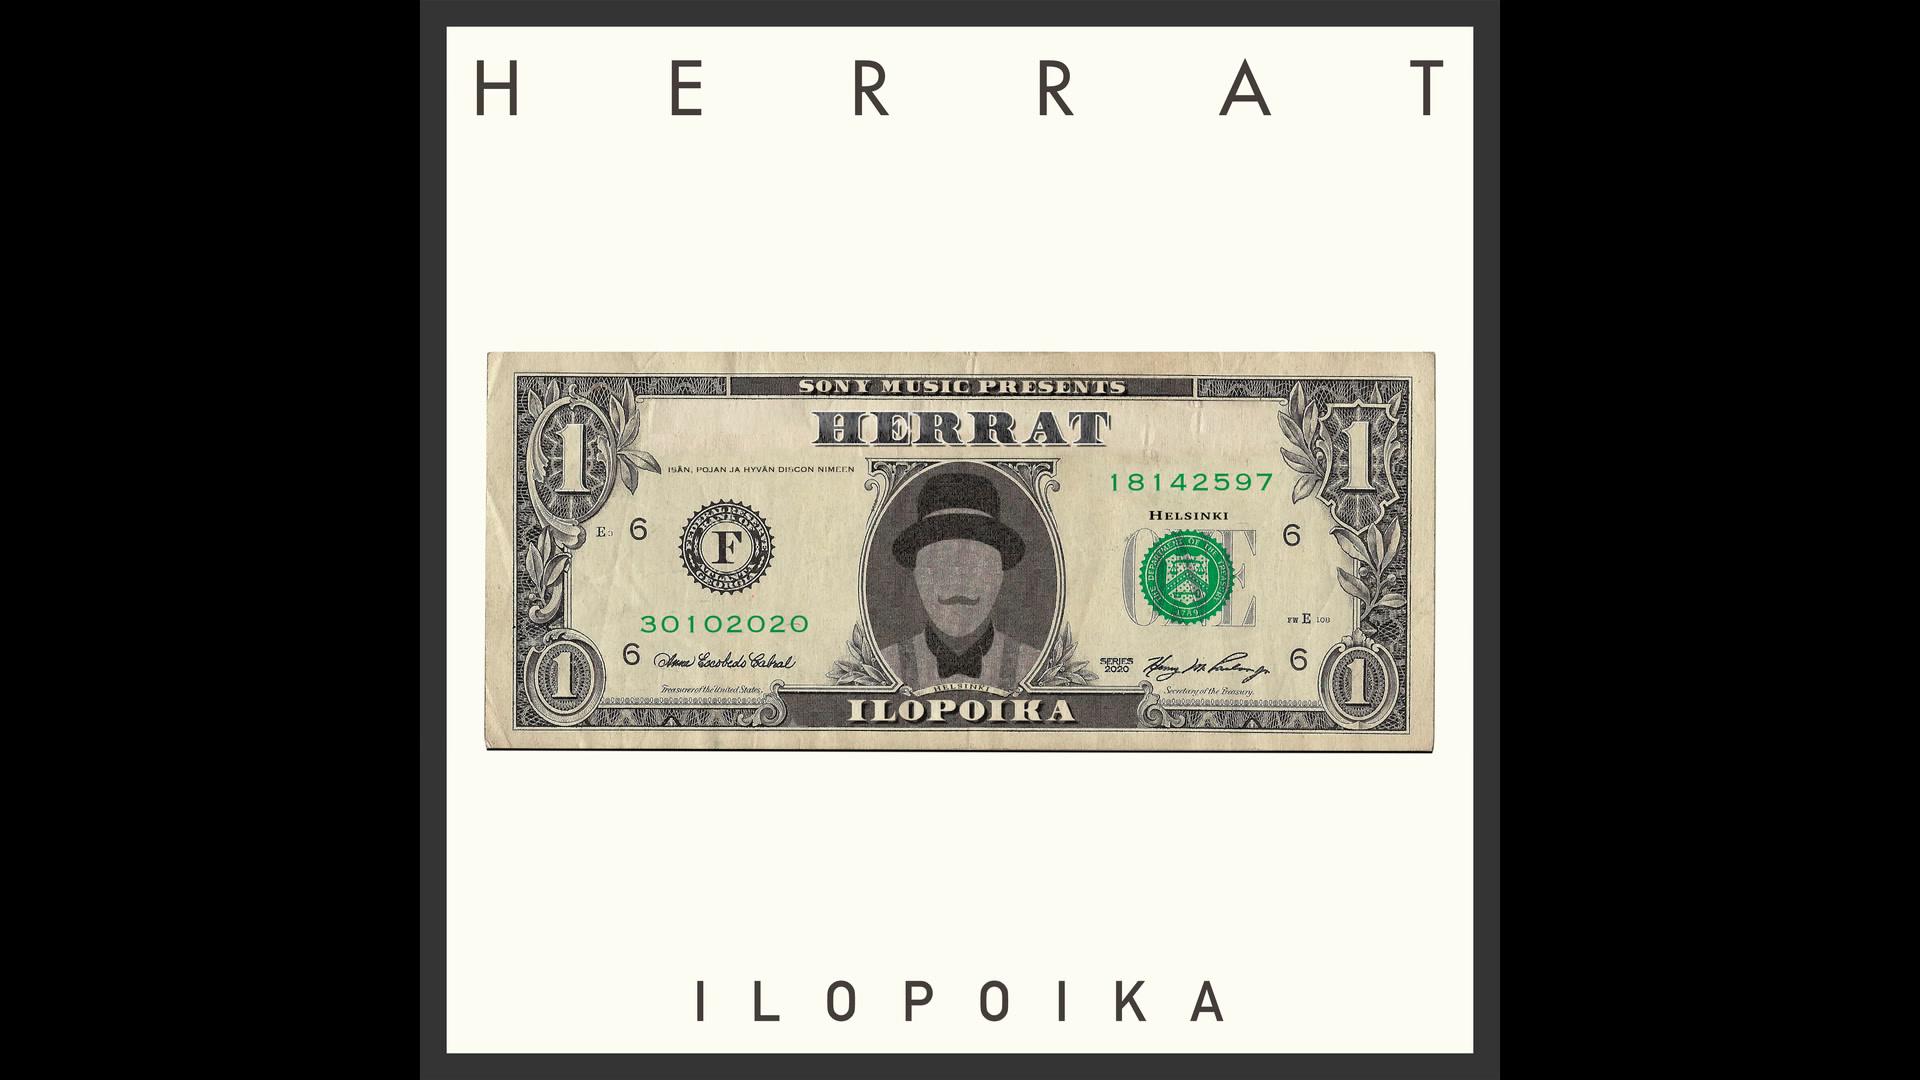 Herrat - Ilopoika (Audio)